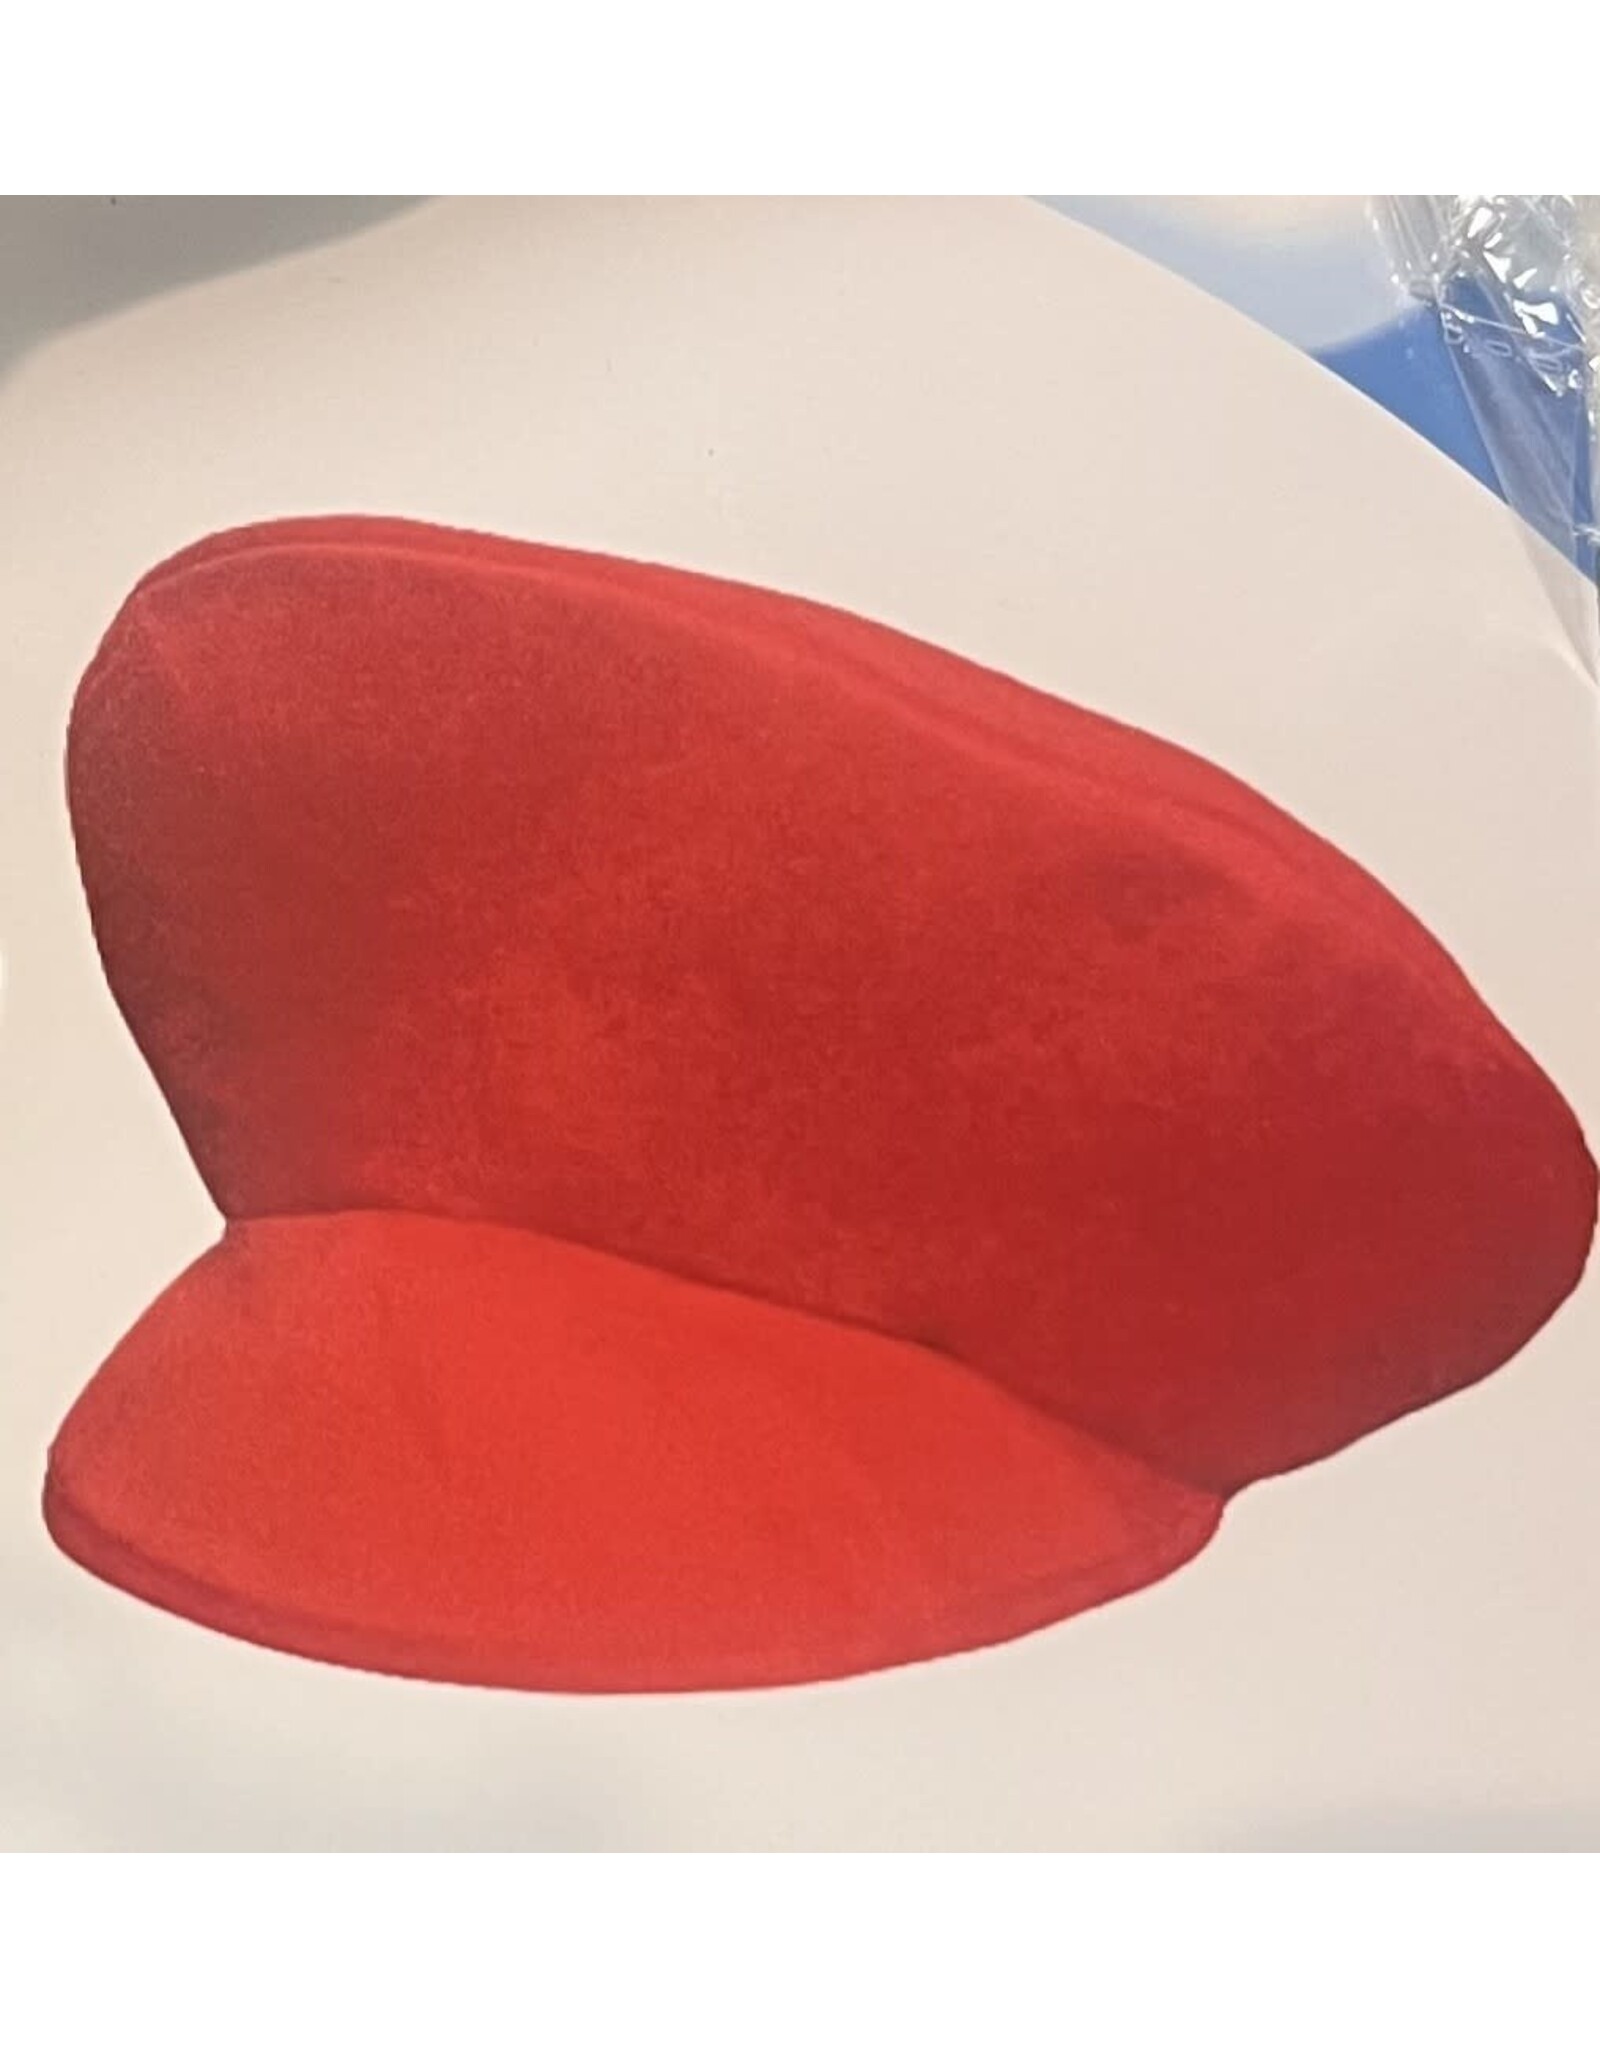 HM Smallwares Plumber's Hat Red